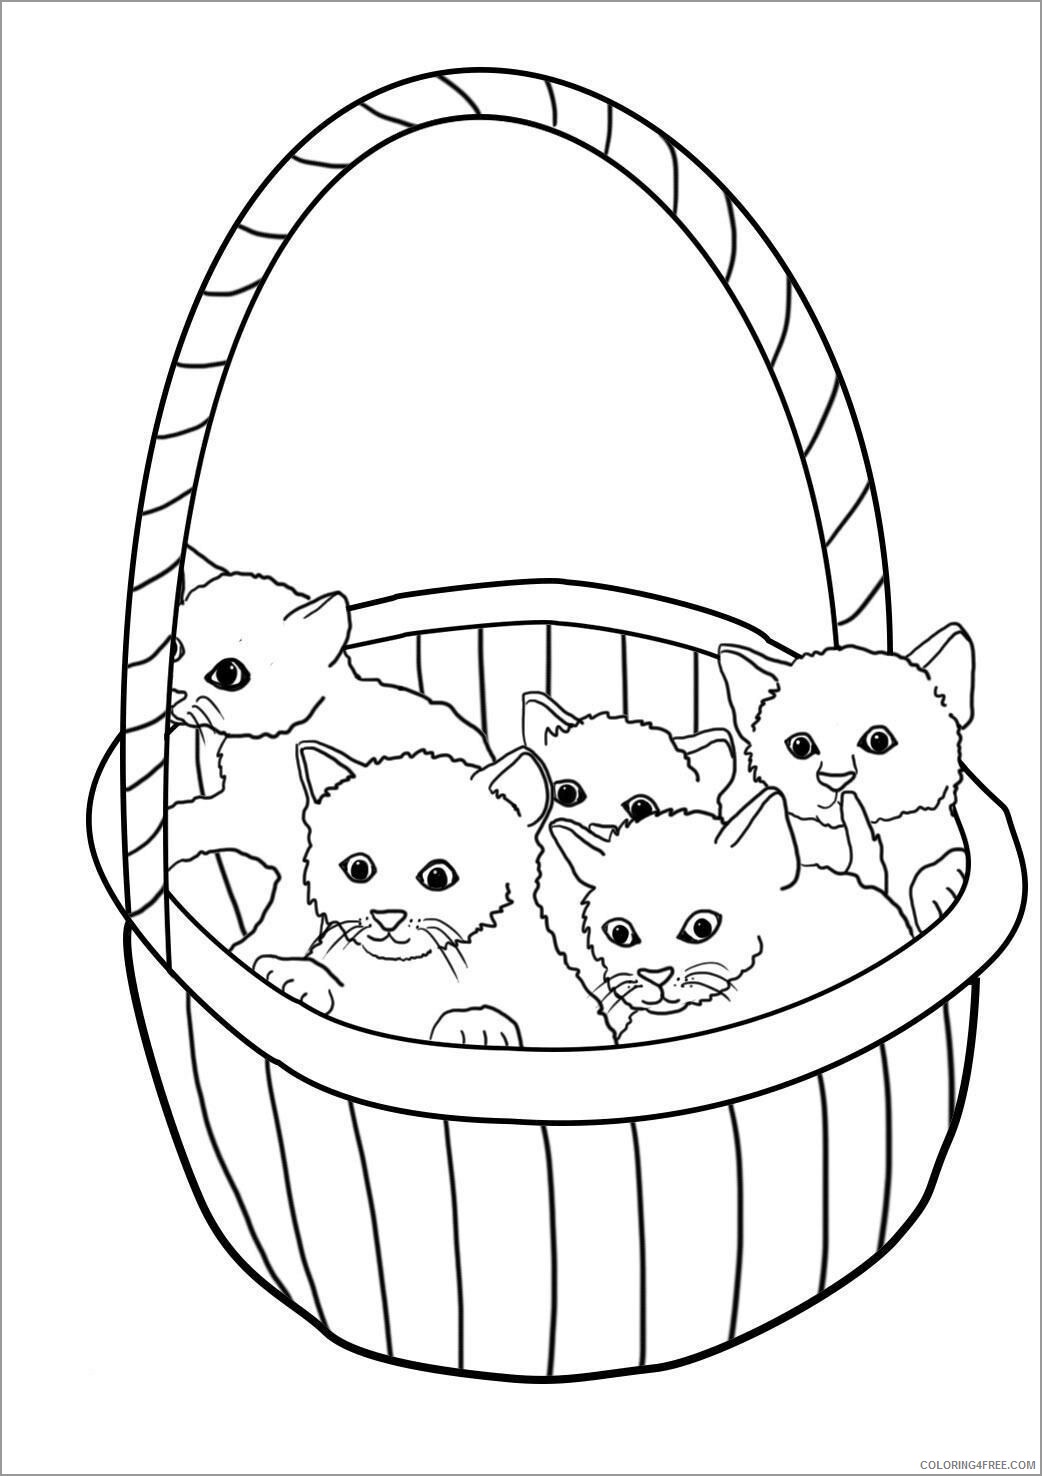 Preschool Animal Coloring Pages kitten for preschoolers Printable 2021 4858 Coloring4free